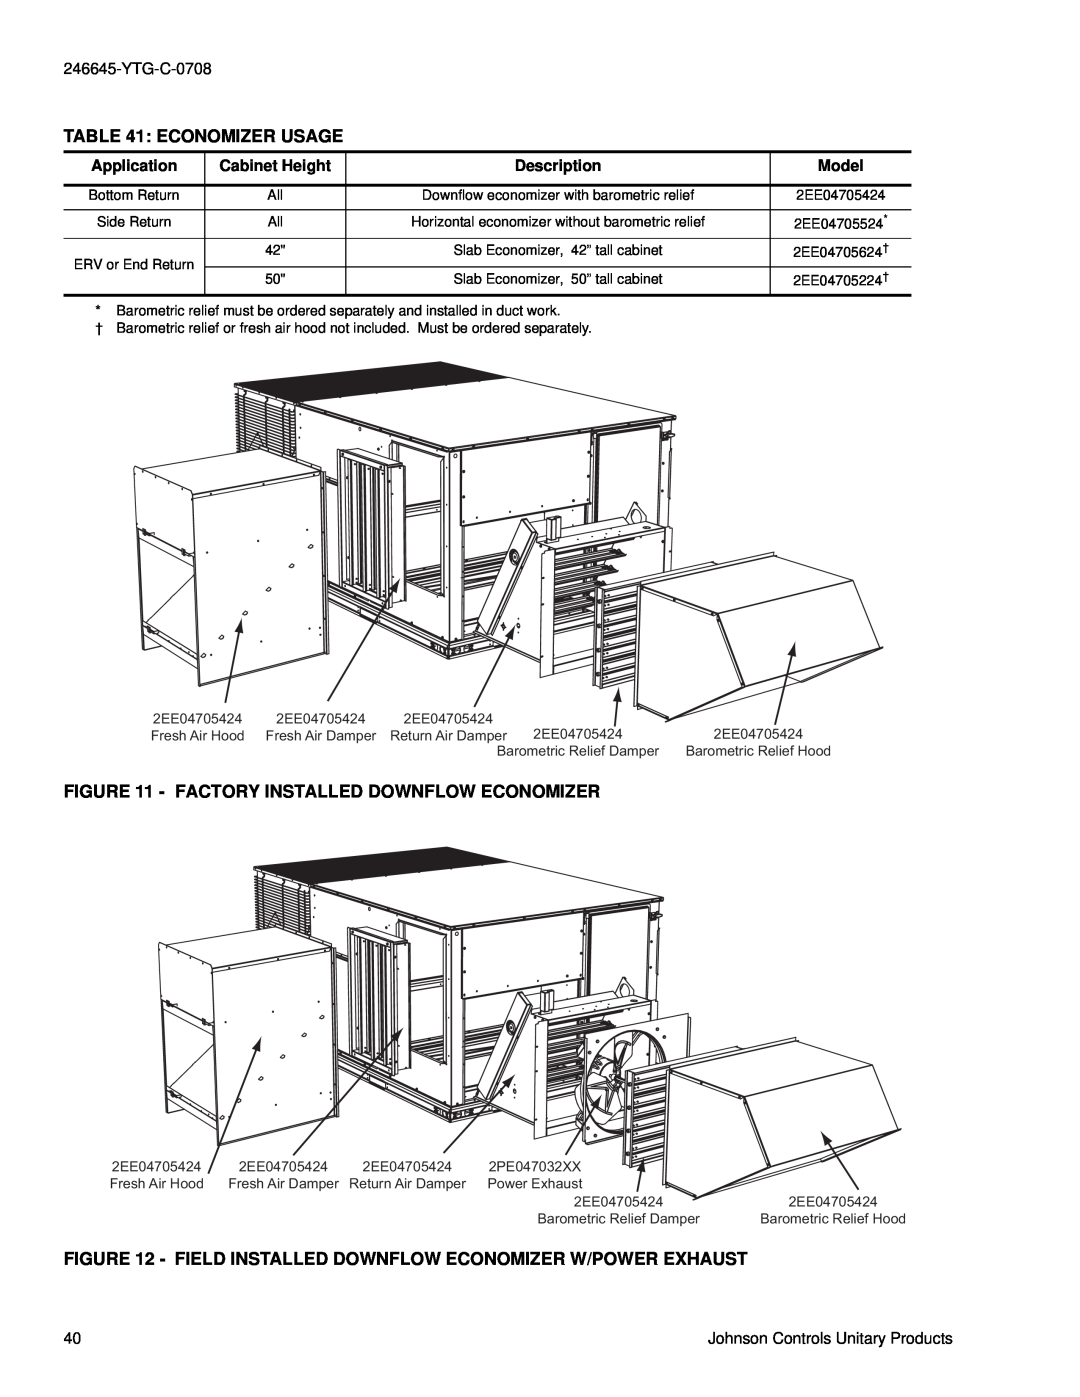 York DM 078 manual Economizer Usage, Factory Installed Downflow Economizer, Application, Cabinet Height, Description, Model 